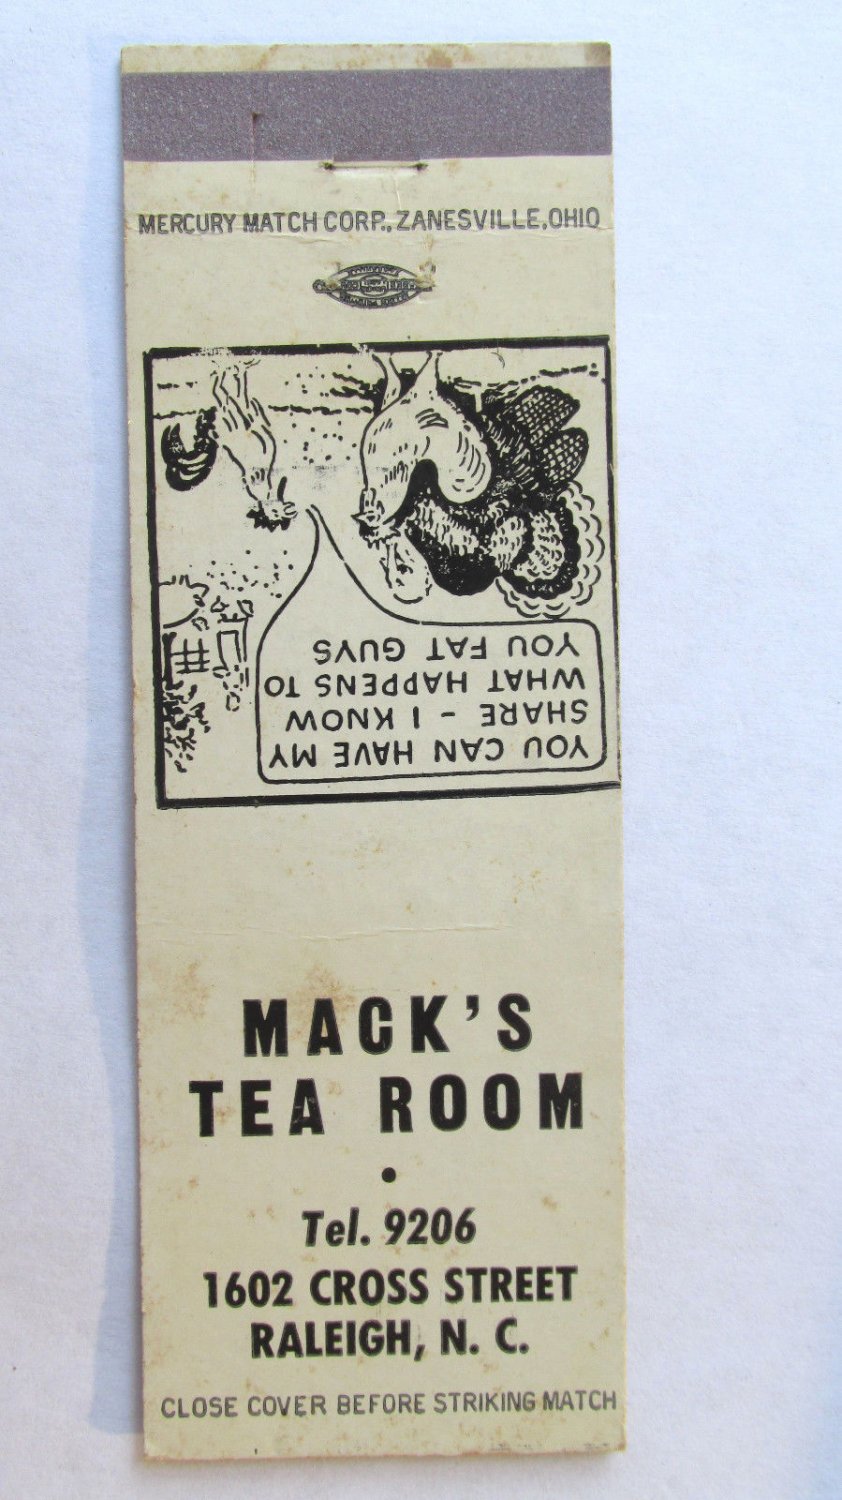 Mack's Tea Room - Raleigh, North Carolina Restaurant 20 Strike Matchbook Cover